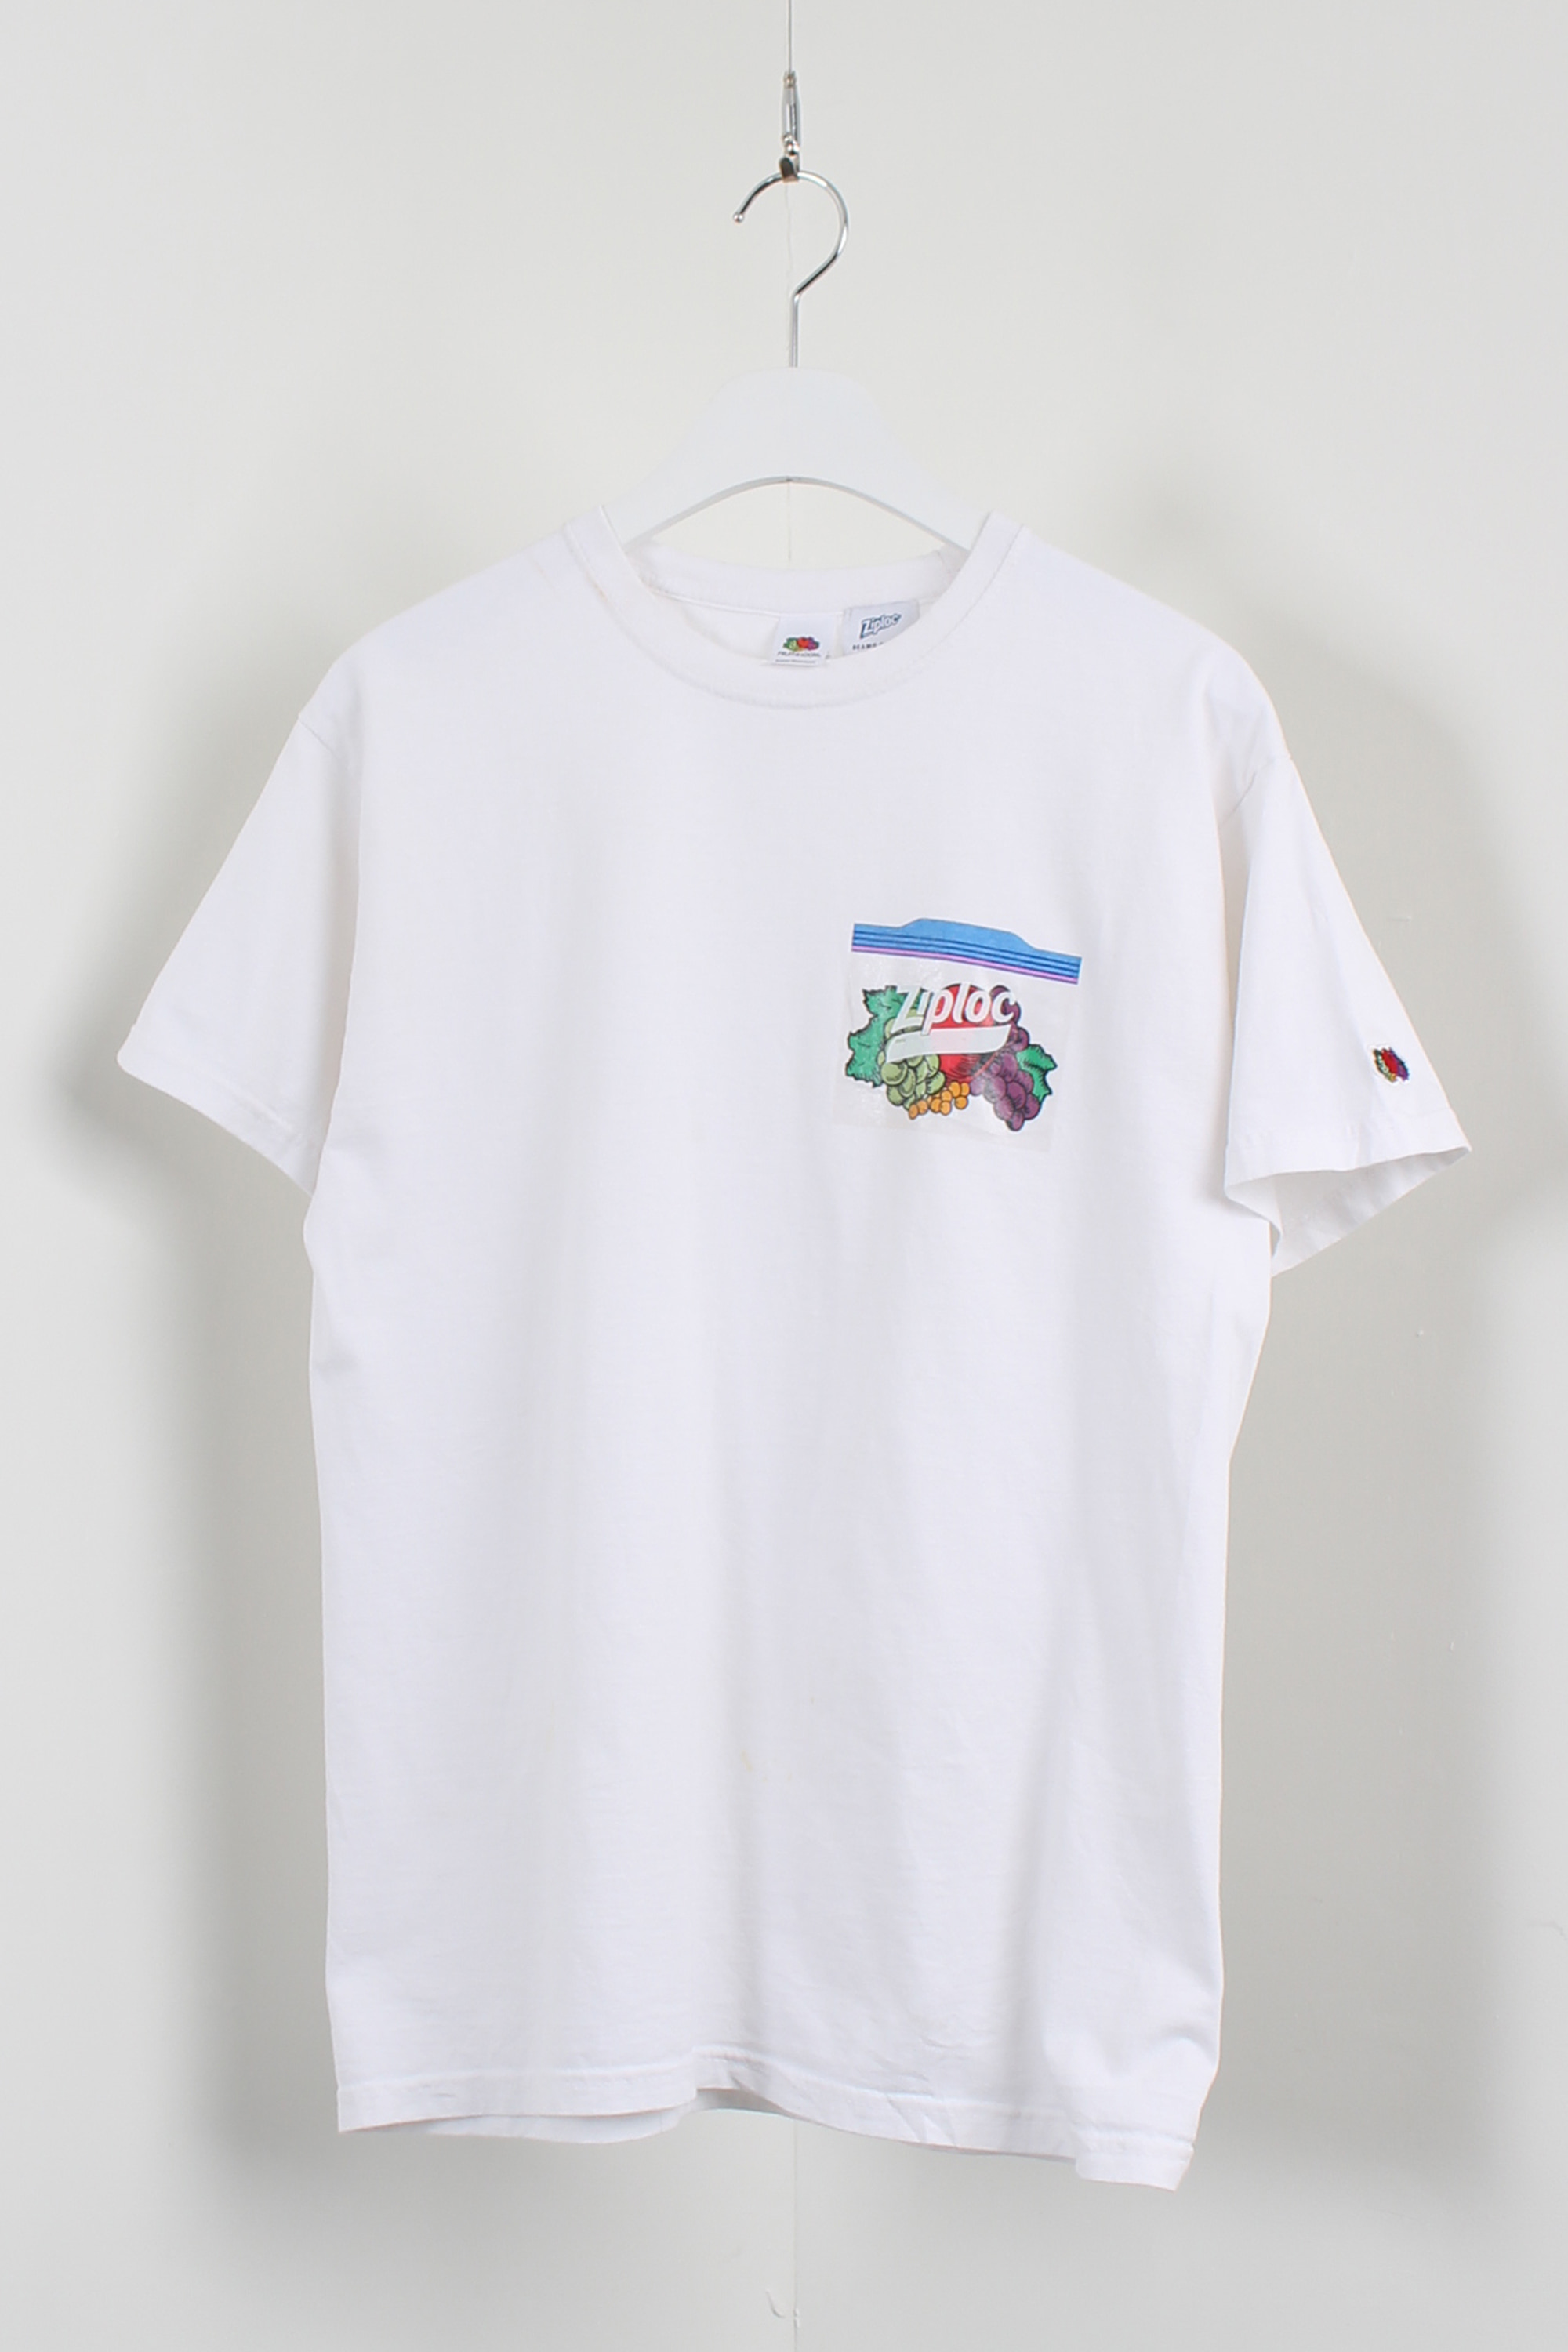 BEAMS COUTURE X Ziploc® t-shirt